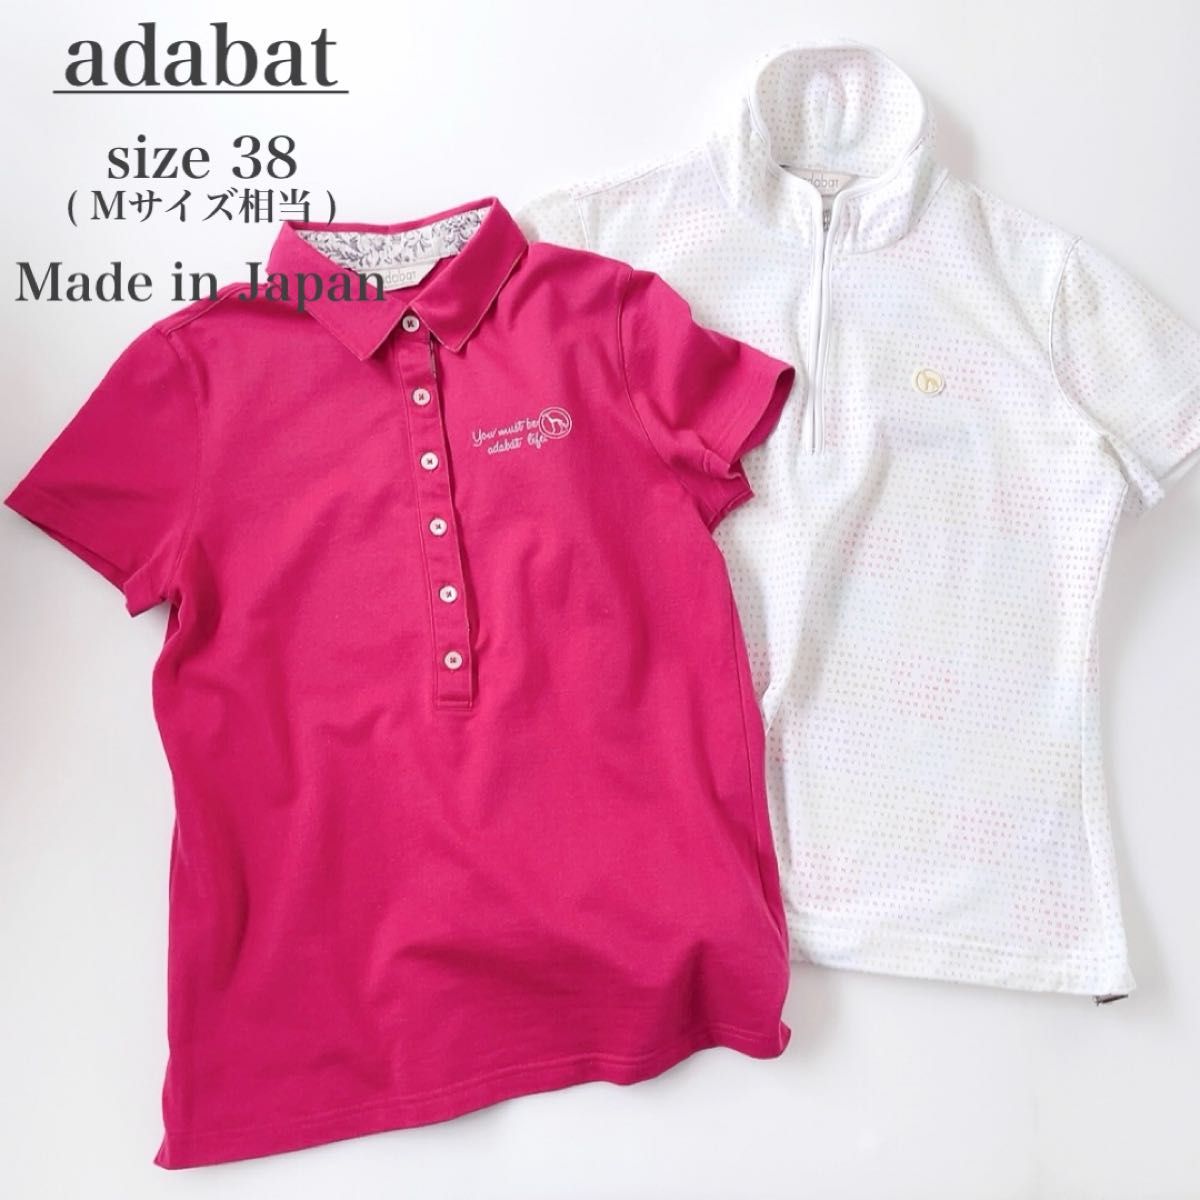 adabat アダバット 38 M ゴルフ ポロシャツ 2枚セット 春夏 半袖 ロゴ サルーキ ワッペン 刺繍 まとめて 日本製